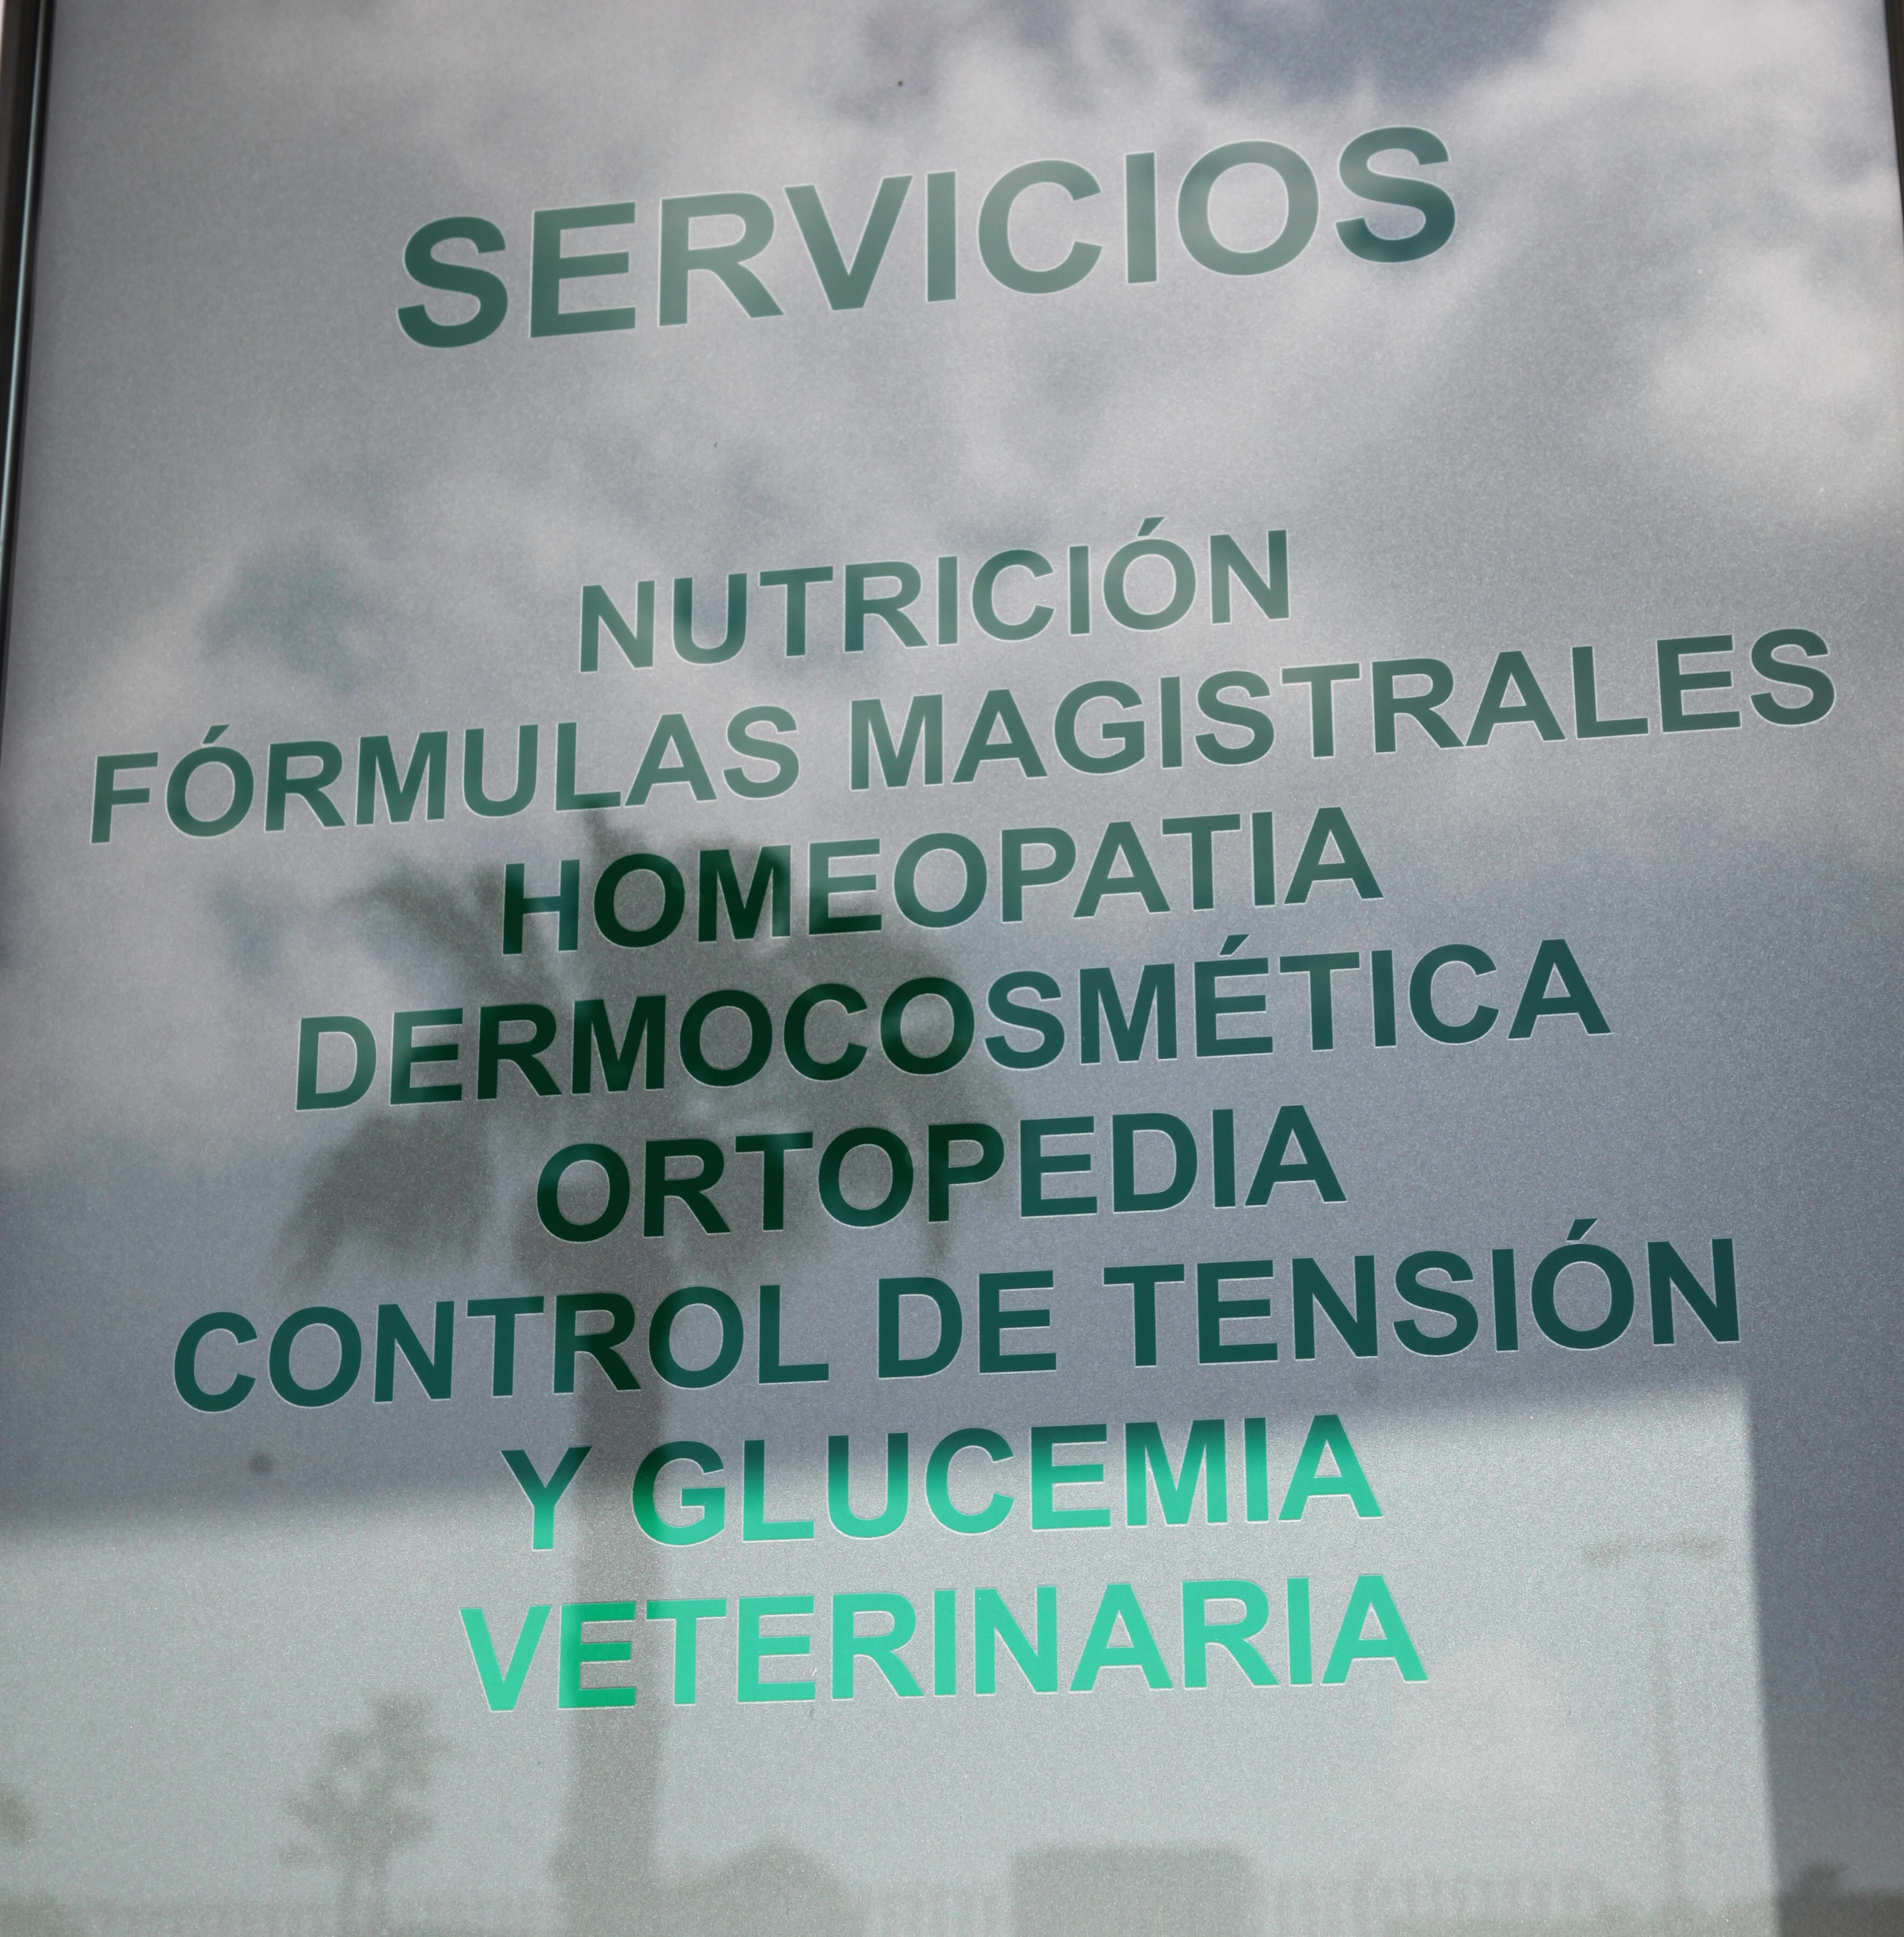 Images Farmacia La Arboleda - Tomares